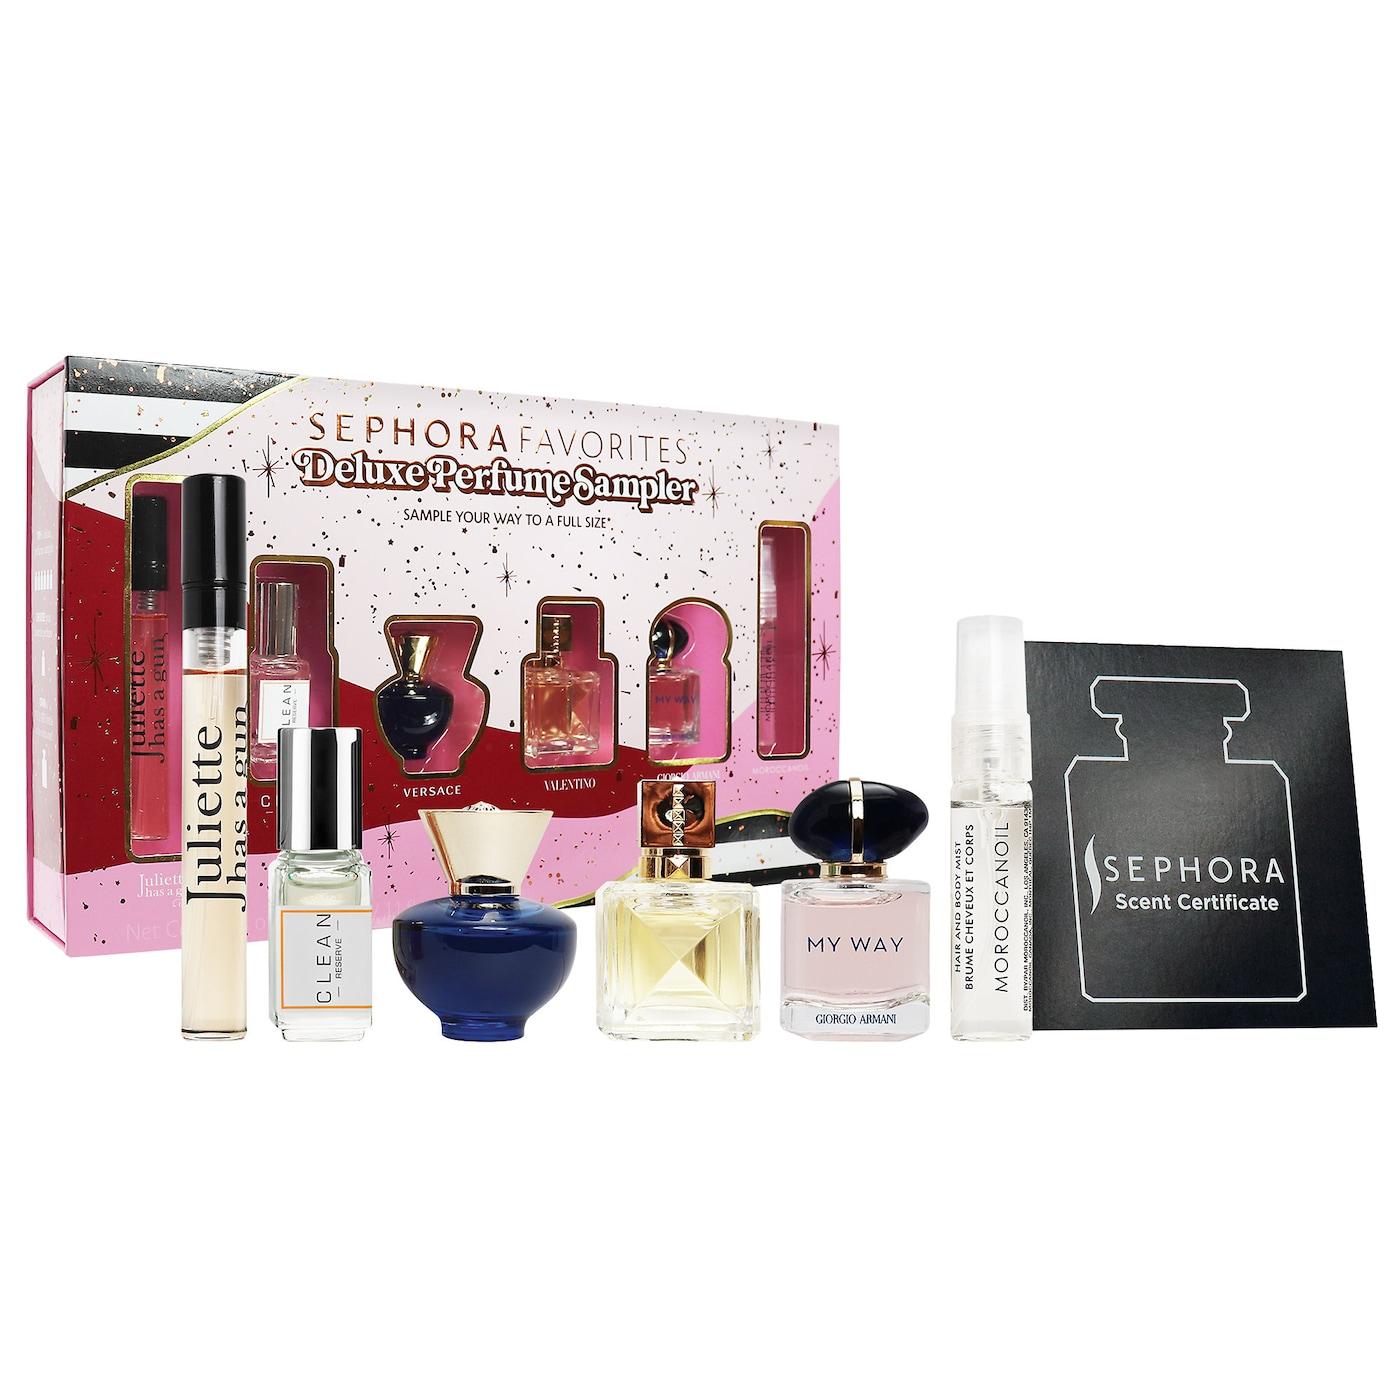 SEPHORA Favorites Deluxe Perfume Sampler Set – On Sale Now!